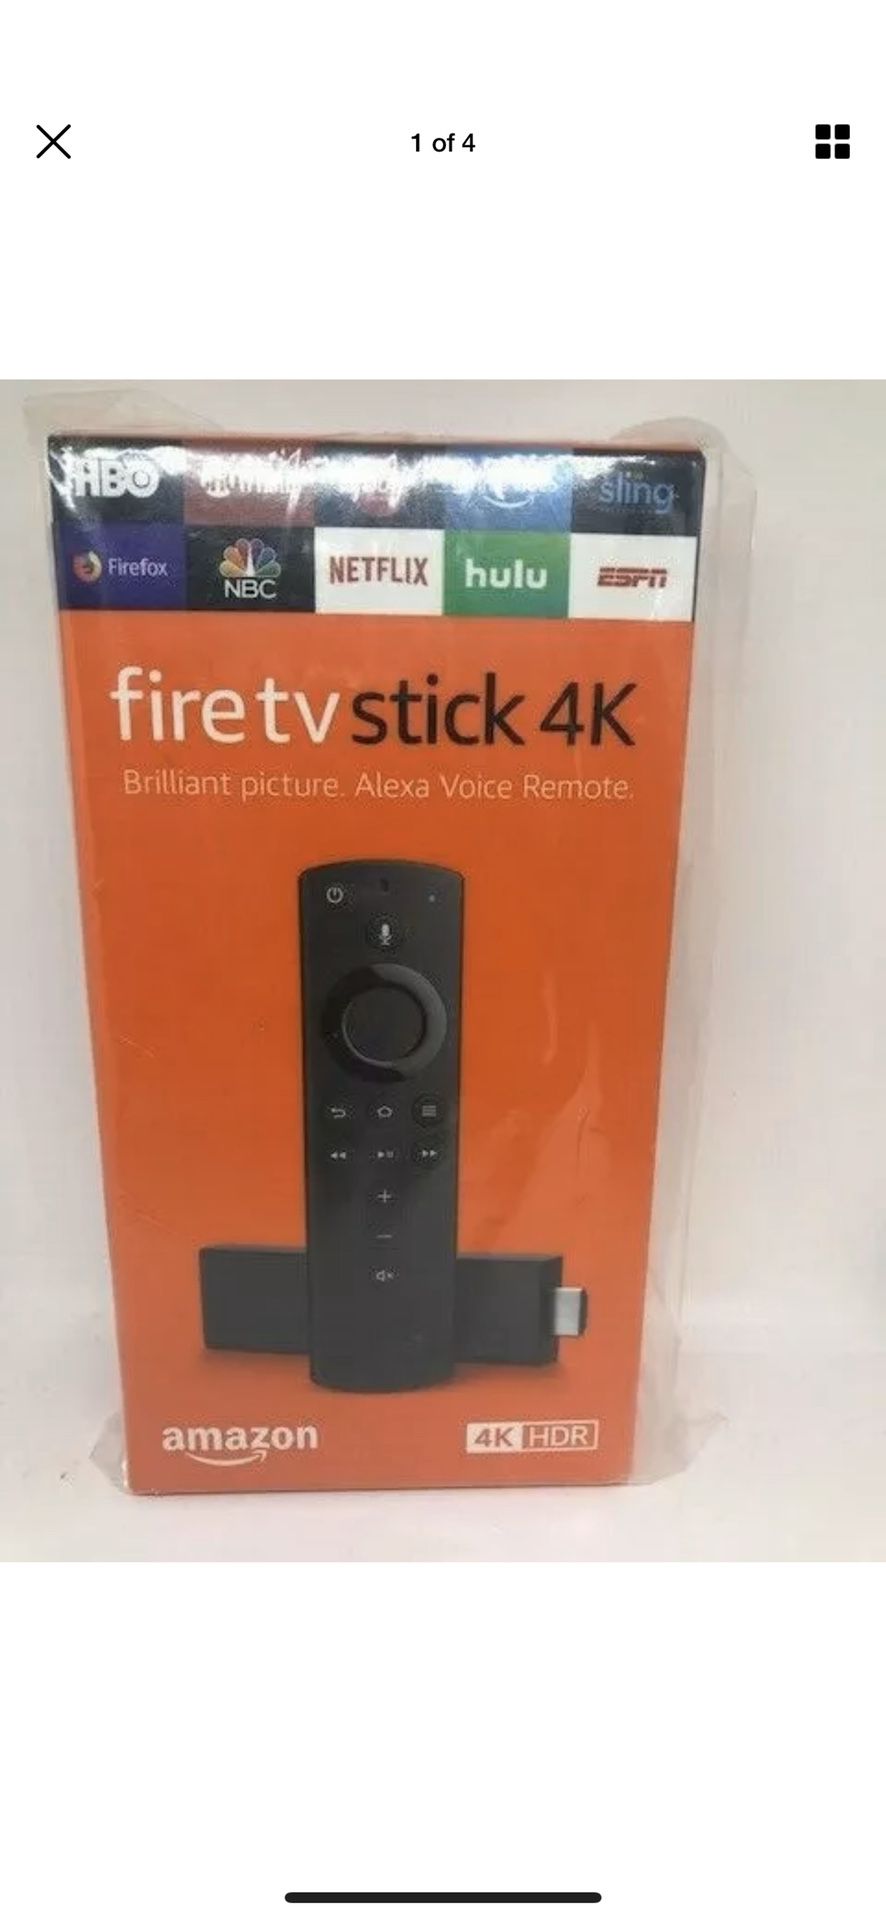 Fire TV Stick 4K with Alexa Voice Remote, LATEST GEN.